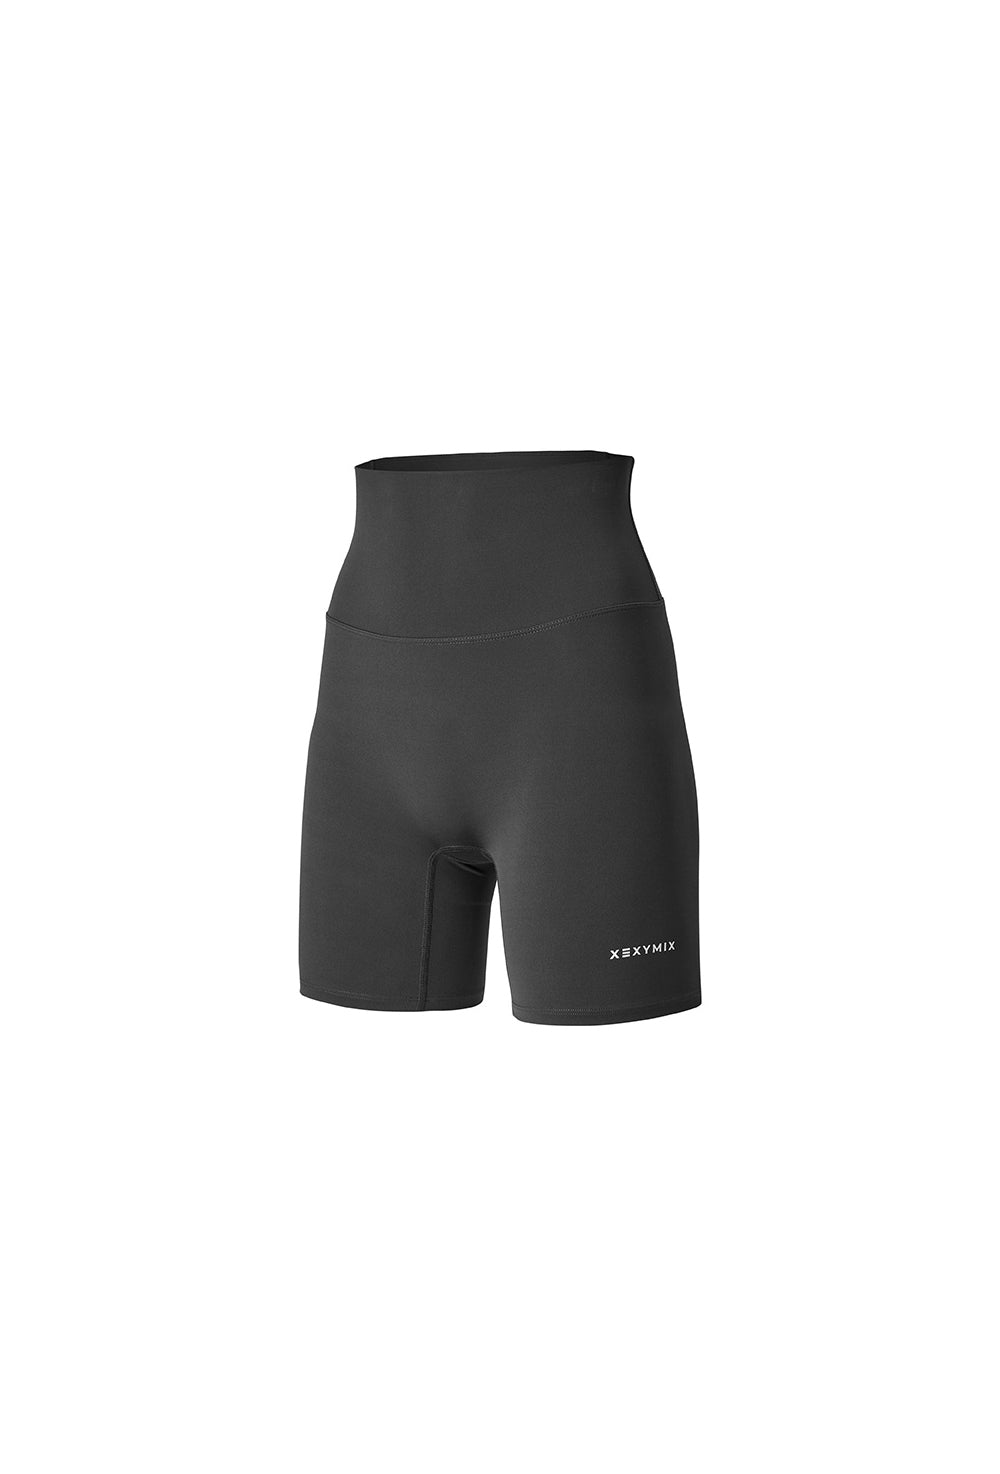 Black Label 360N Leggings 3.5 Shorts - Iron Charcoal